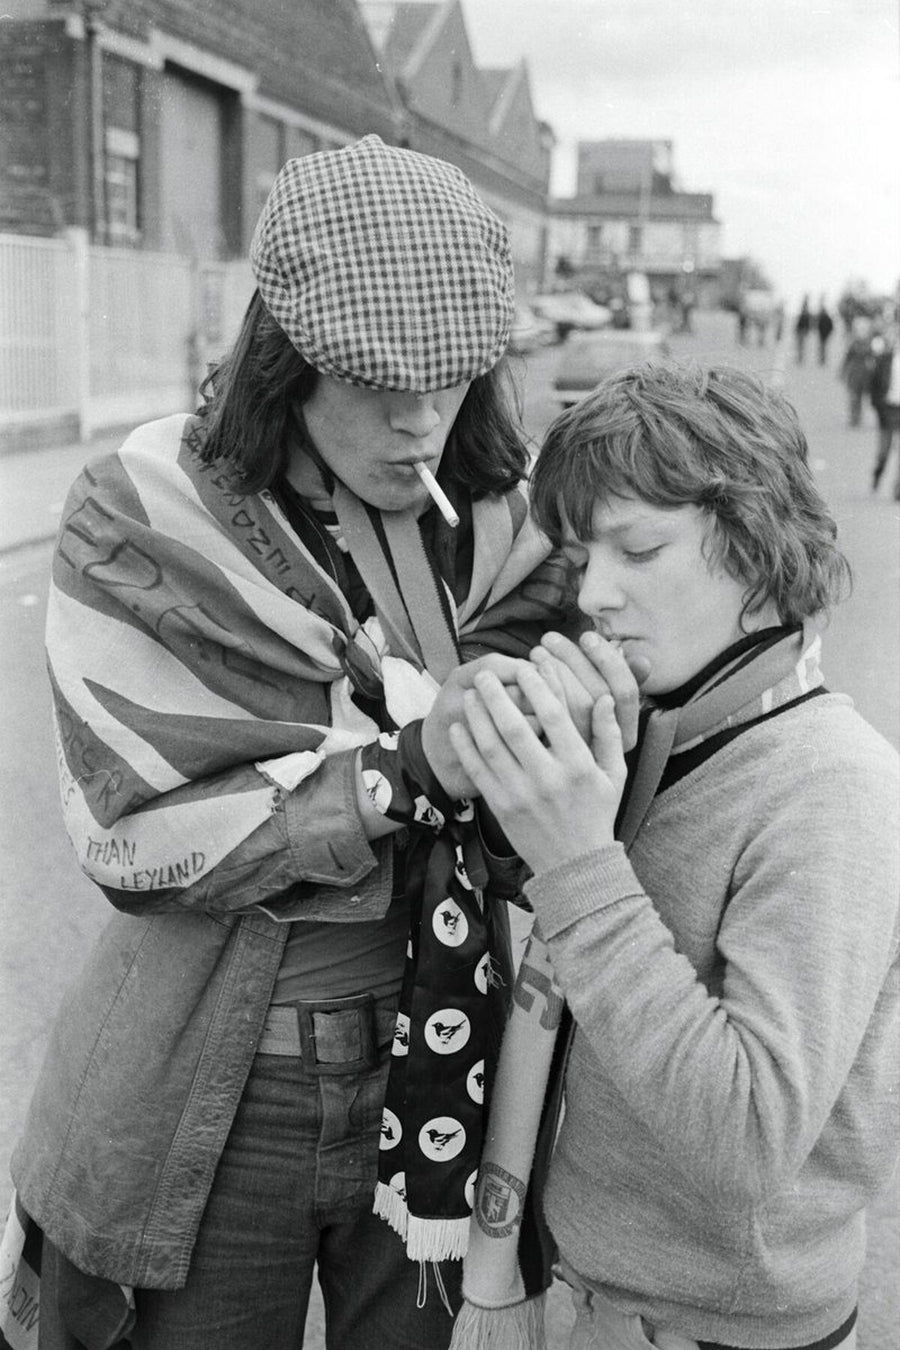 Boys Lighting a Cigarette by Iain SP Reid - c. 1976